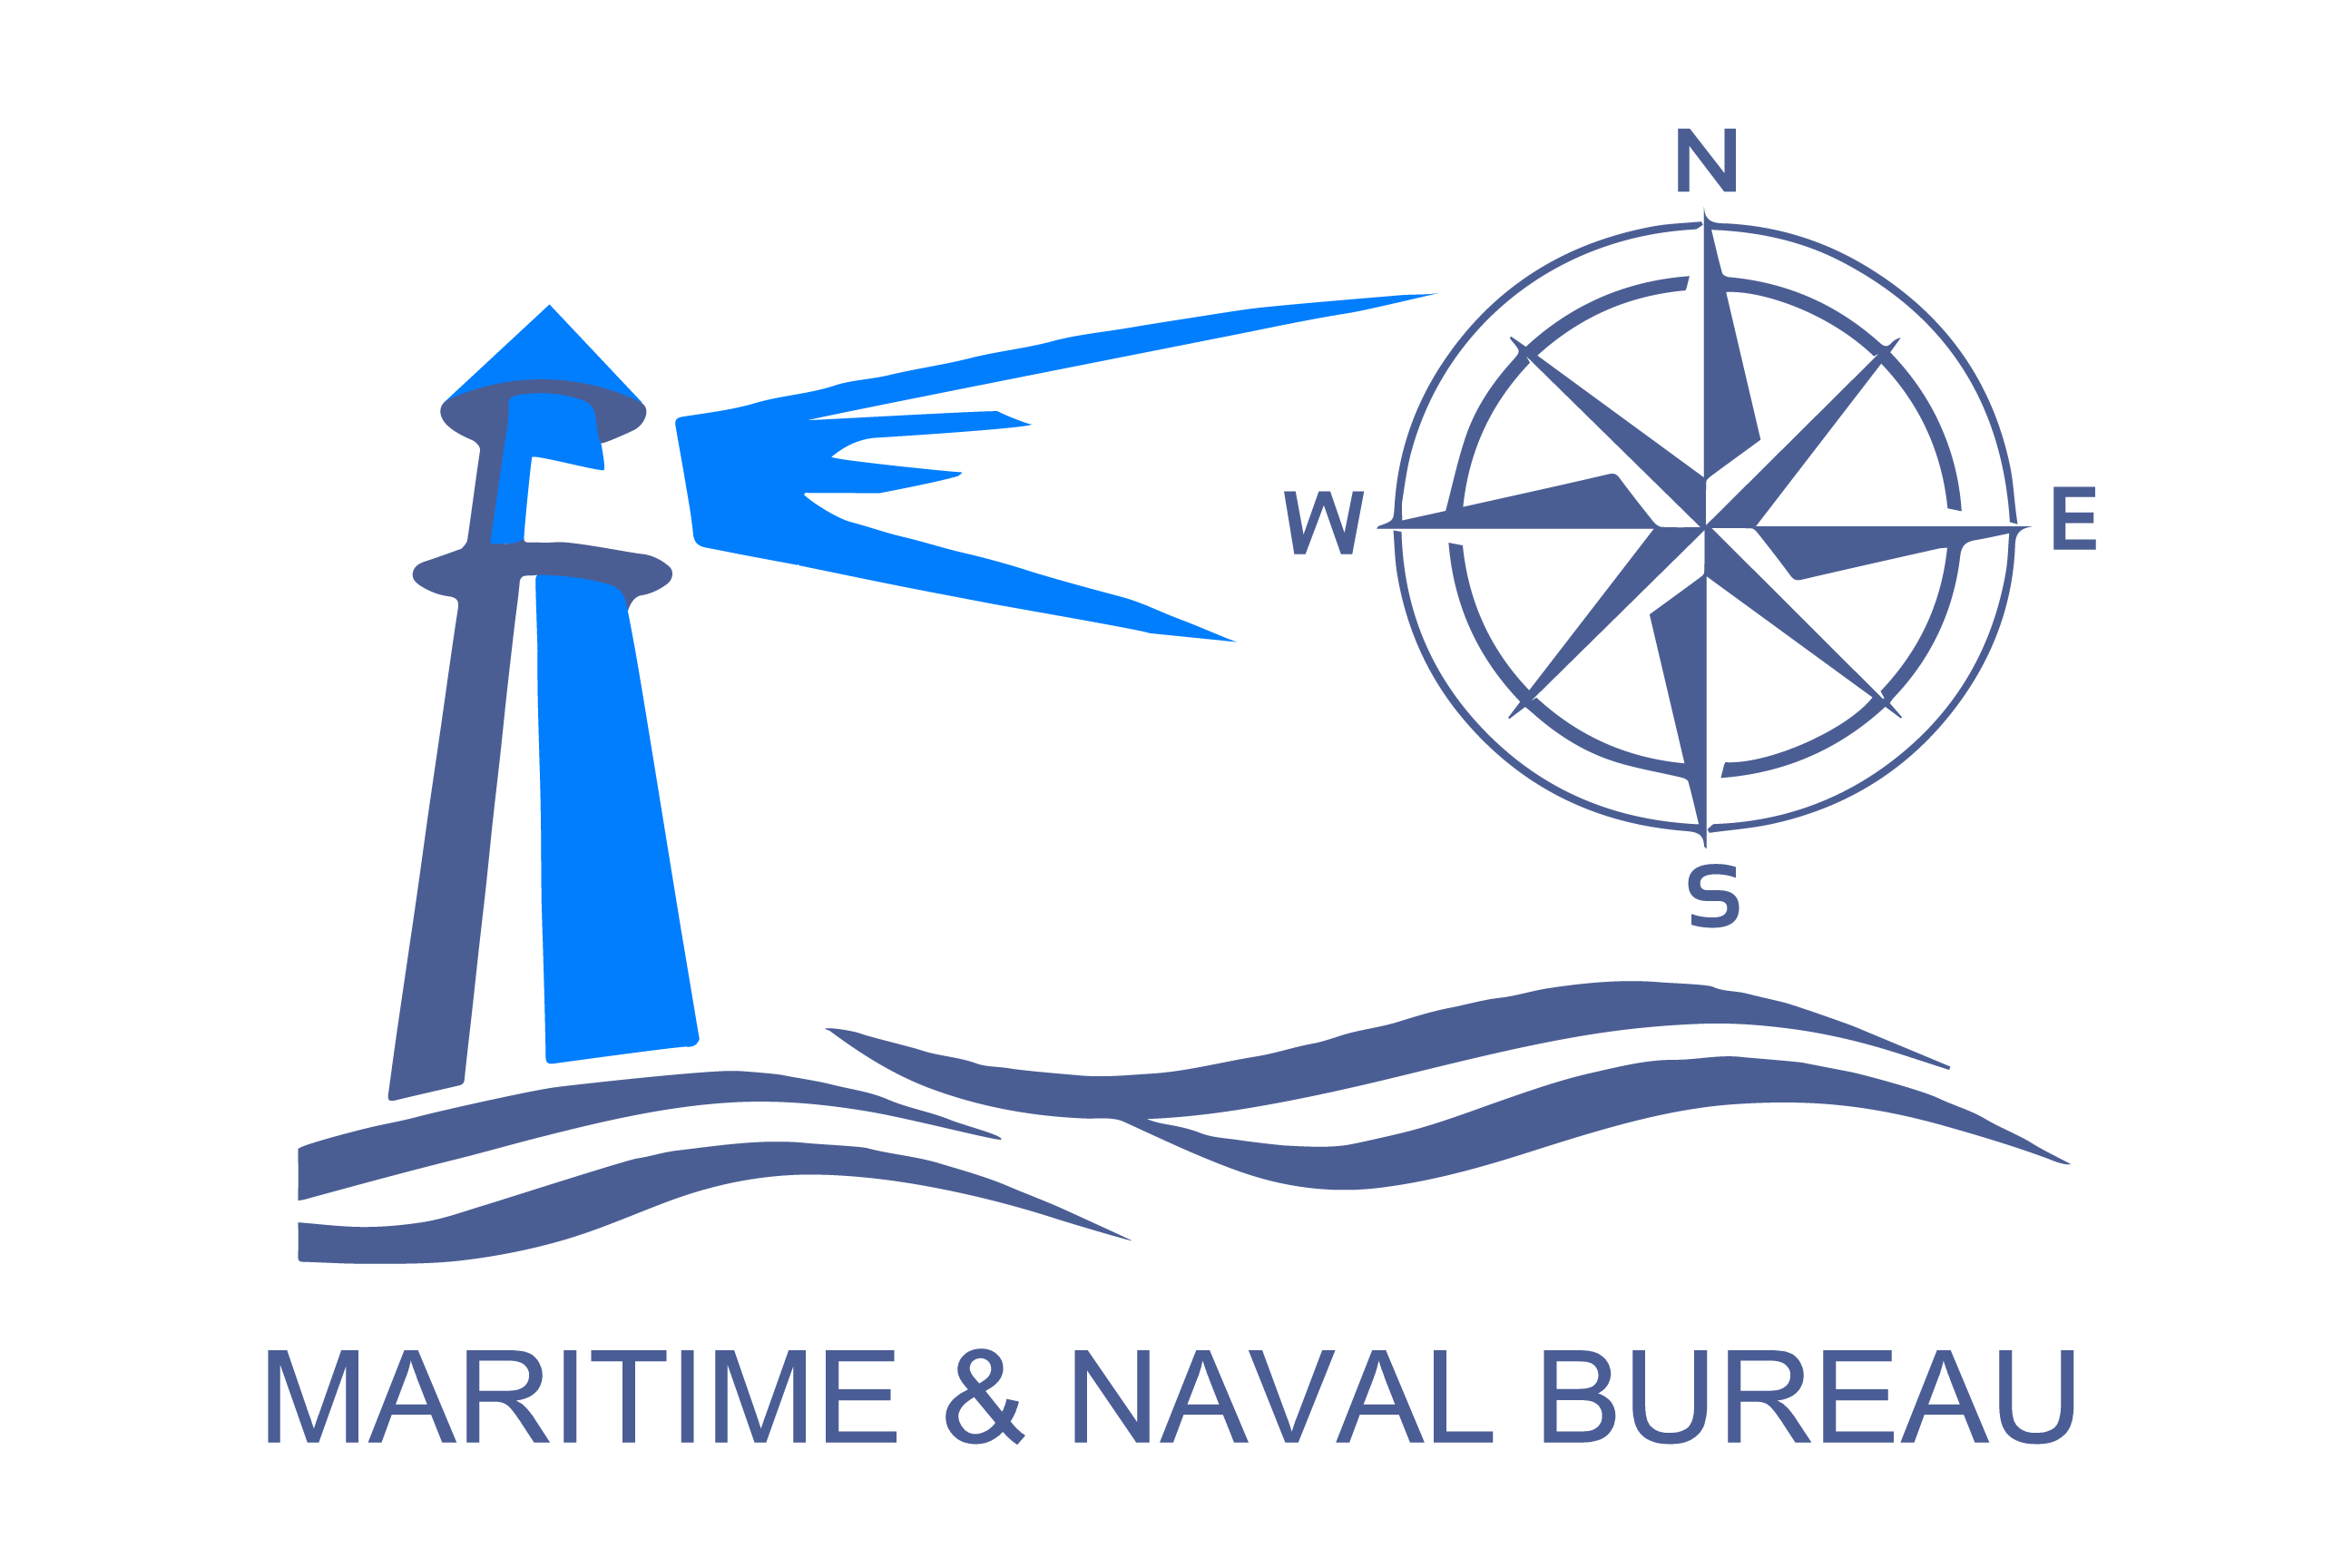 Maritime and naval bureau